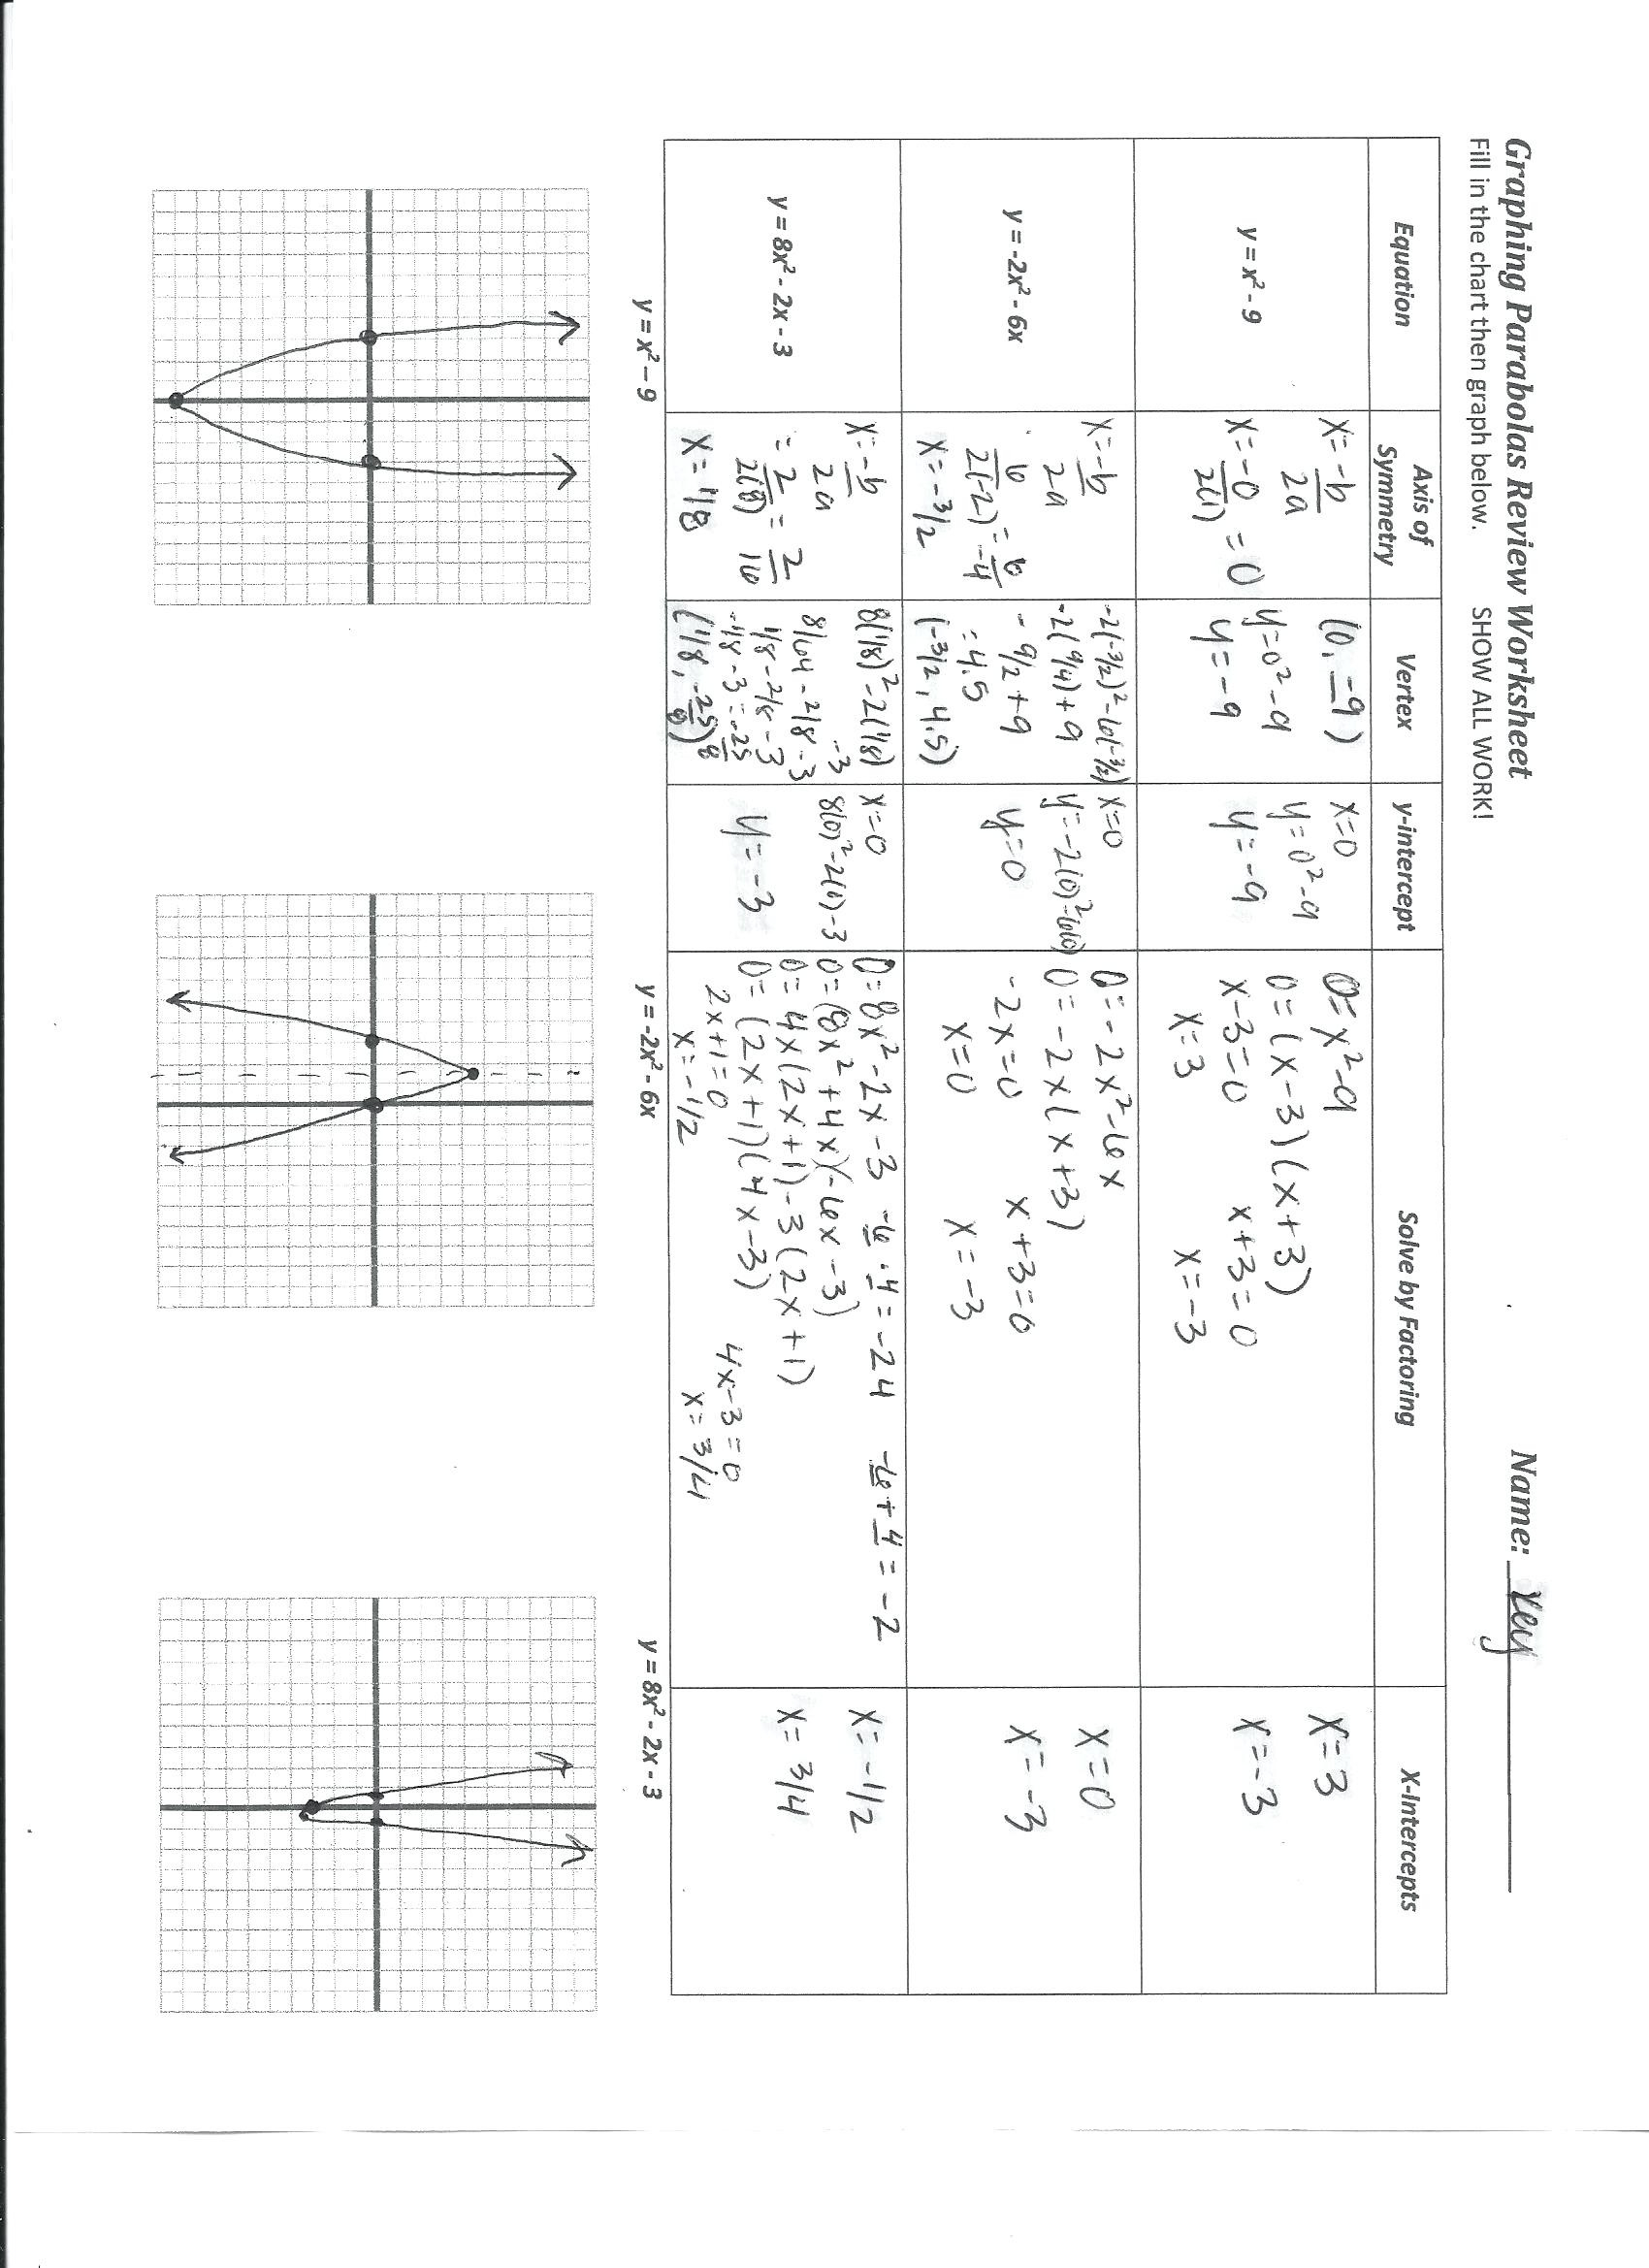 graphing-parabolas-worksheet-algebra-1-db-excel